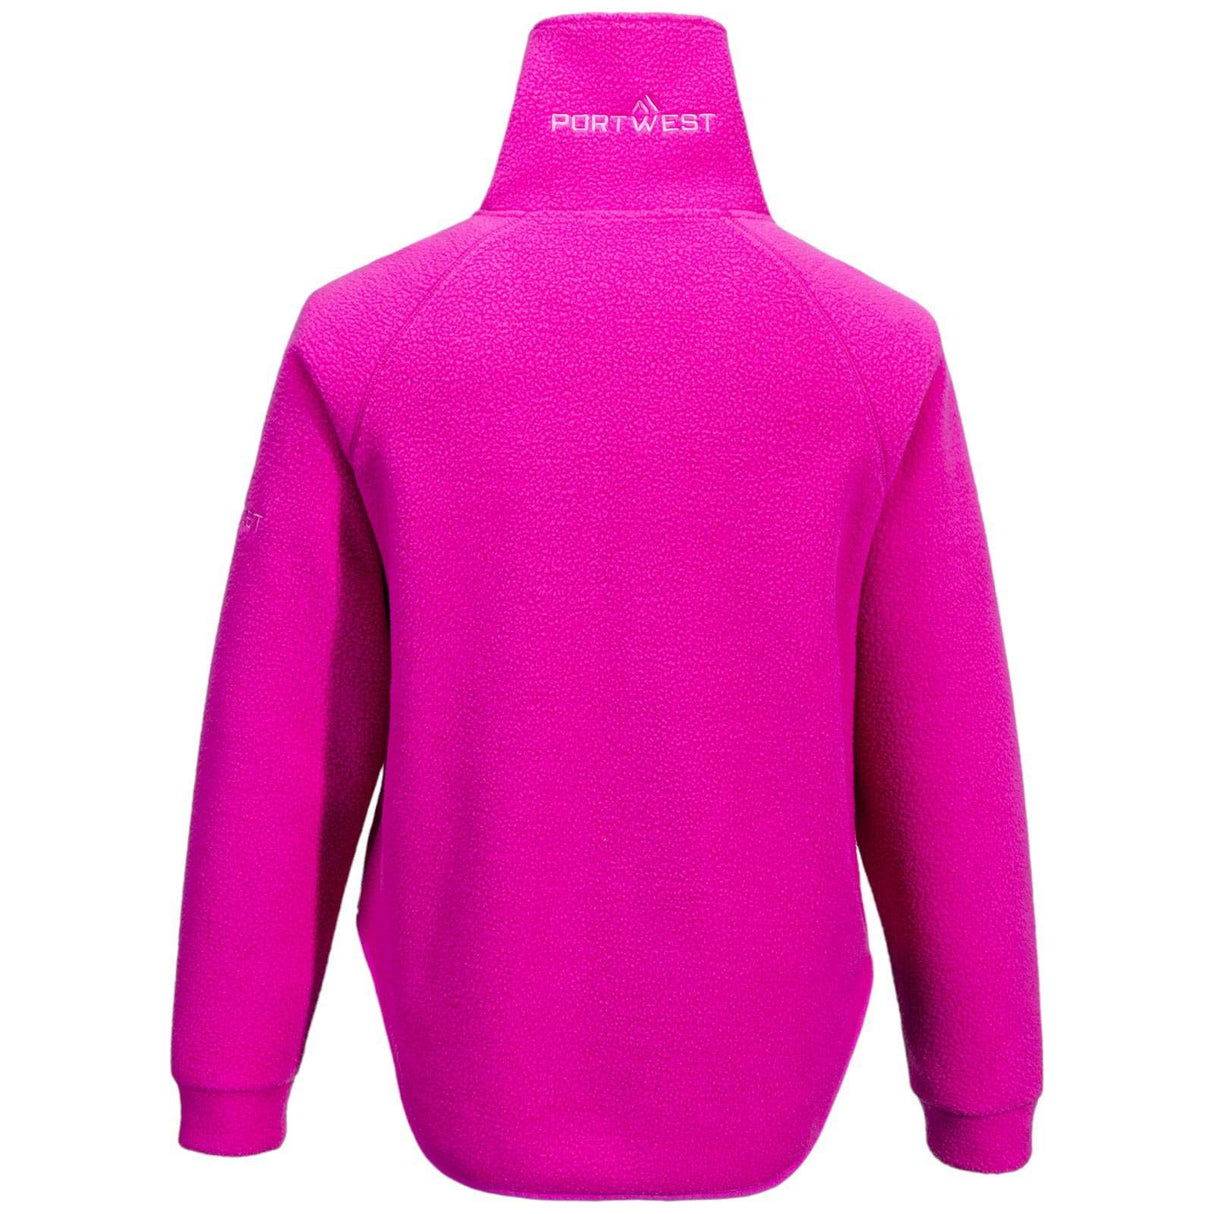 Portwest Powerscount Womens Fleece Pink